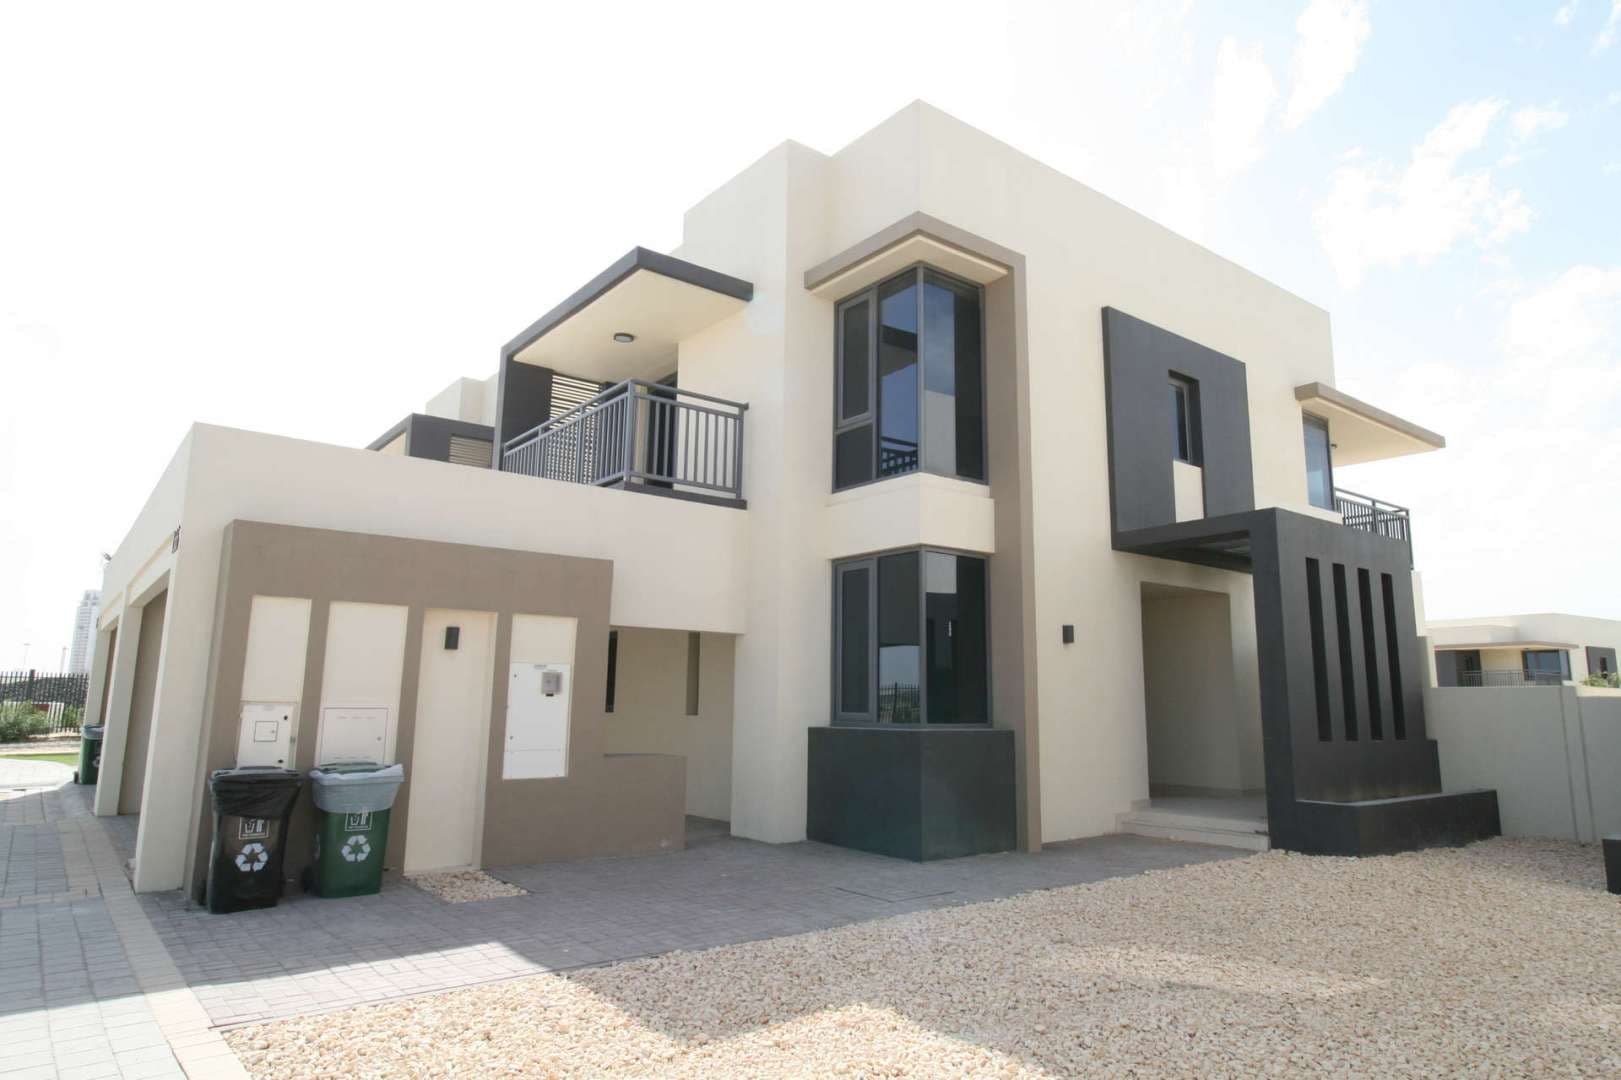 5 Bedroom Townhouse For Sale Maple At Dubai Hills Estate Lp07824 2a198bca449f8c00.jpg